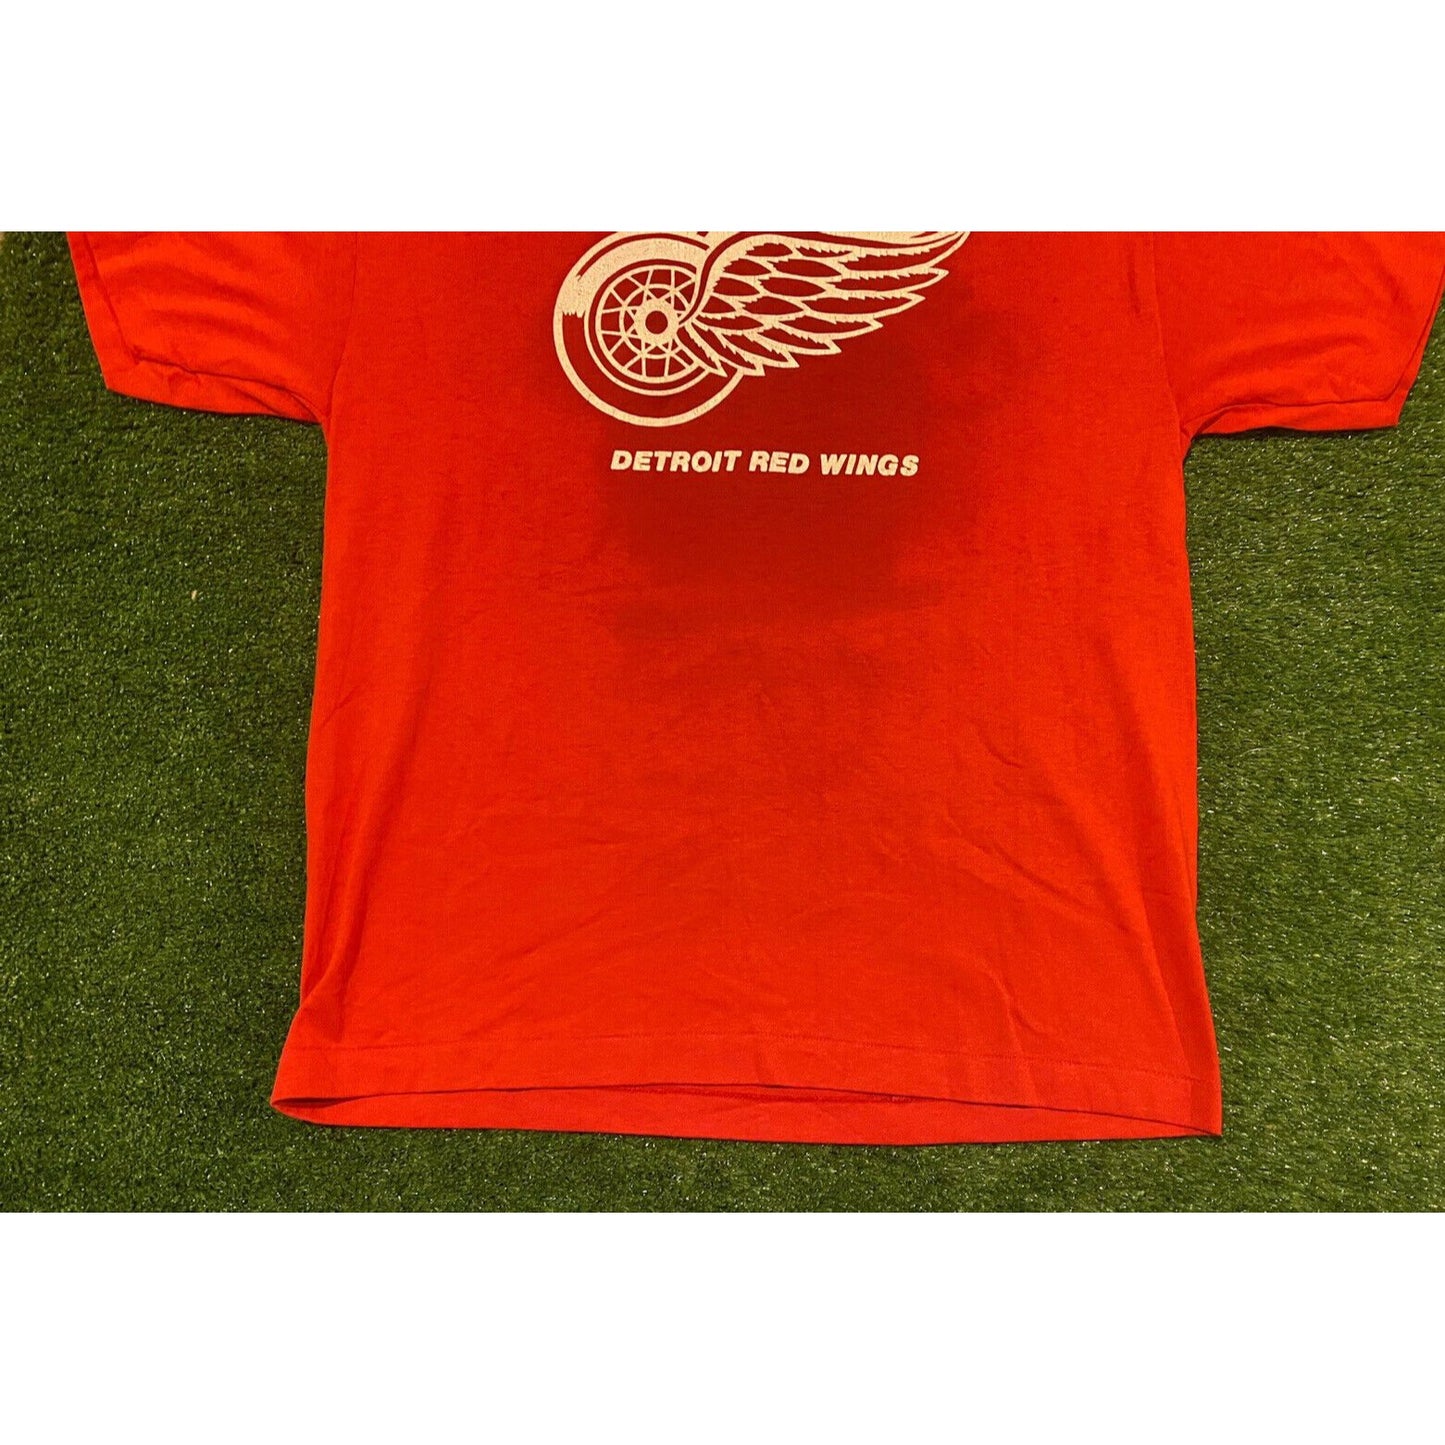 Vintage 1990s Tee Jays Detroit Red Wings hockey logo t-shirt large NHL Retro